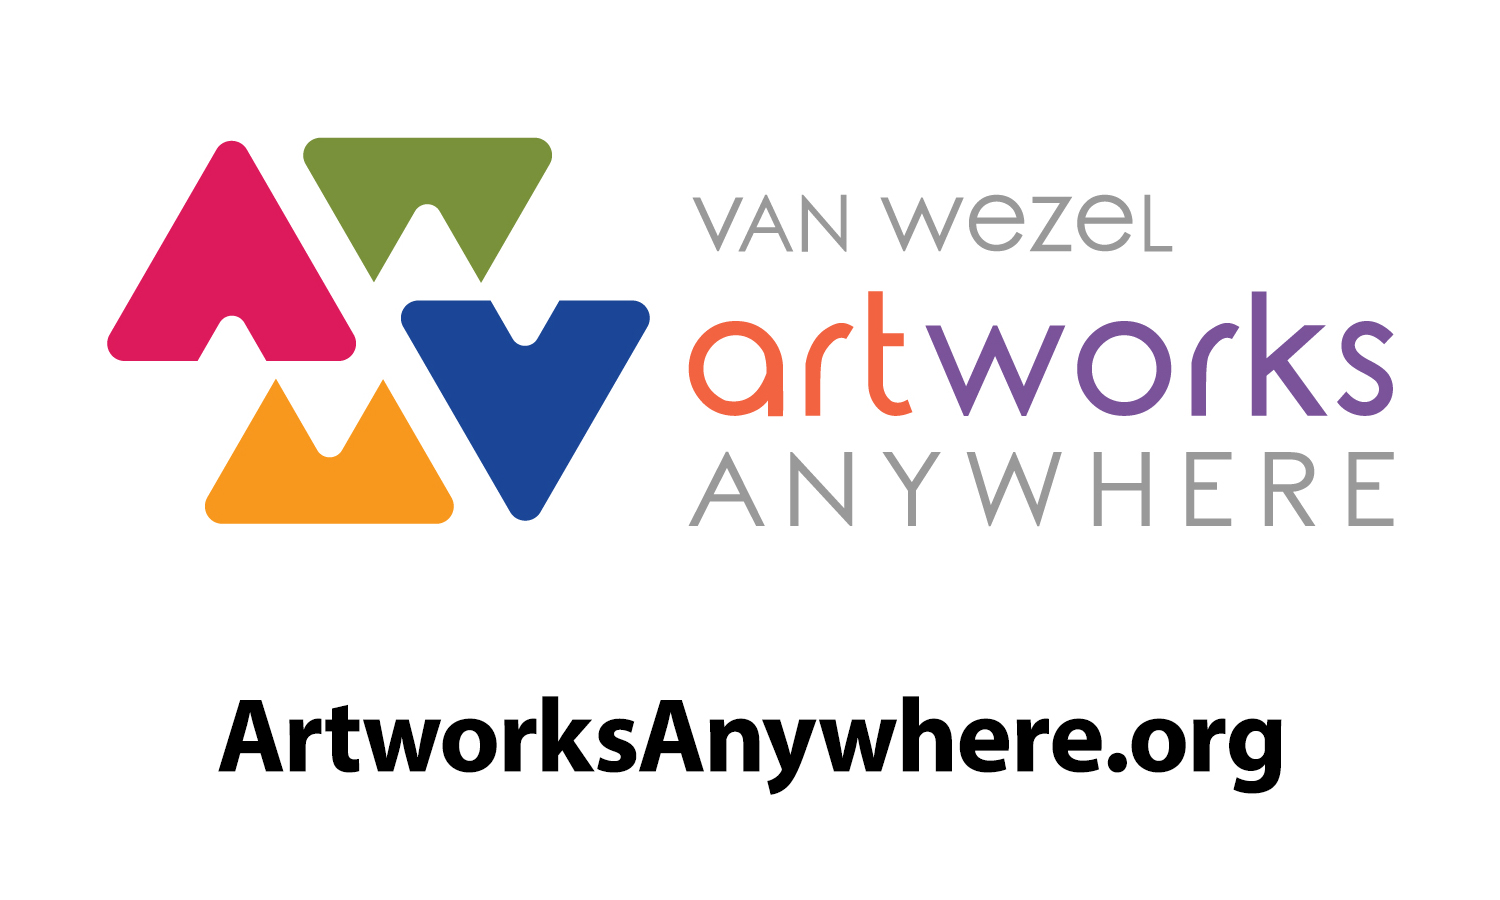 Van Wezel Education Department and Van Wezel Foundation Launch ArtworksAnywhere.org